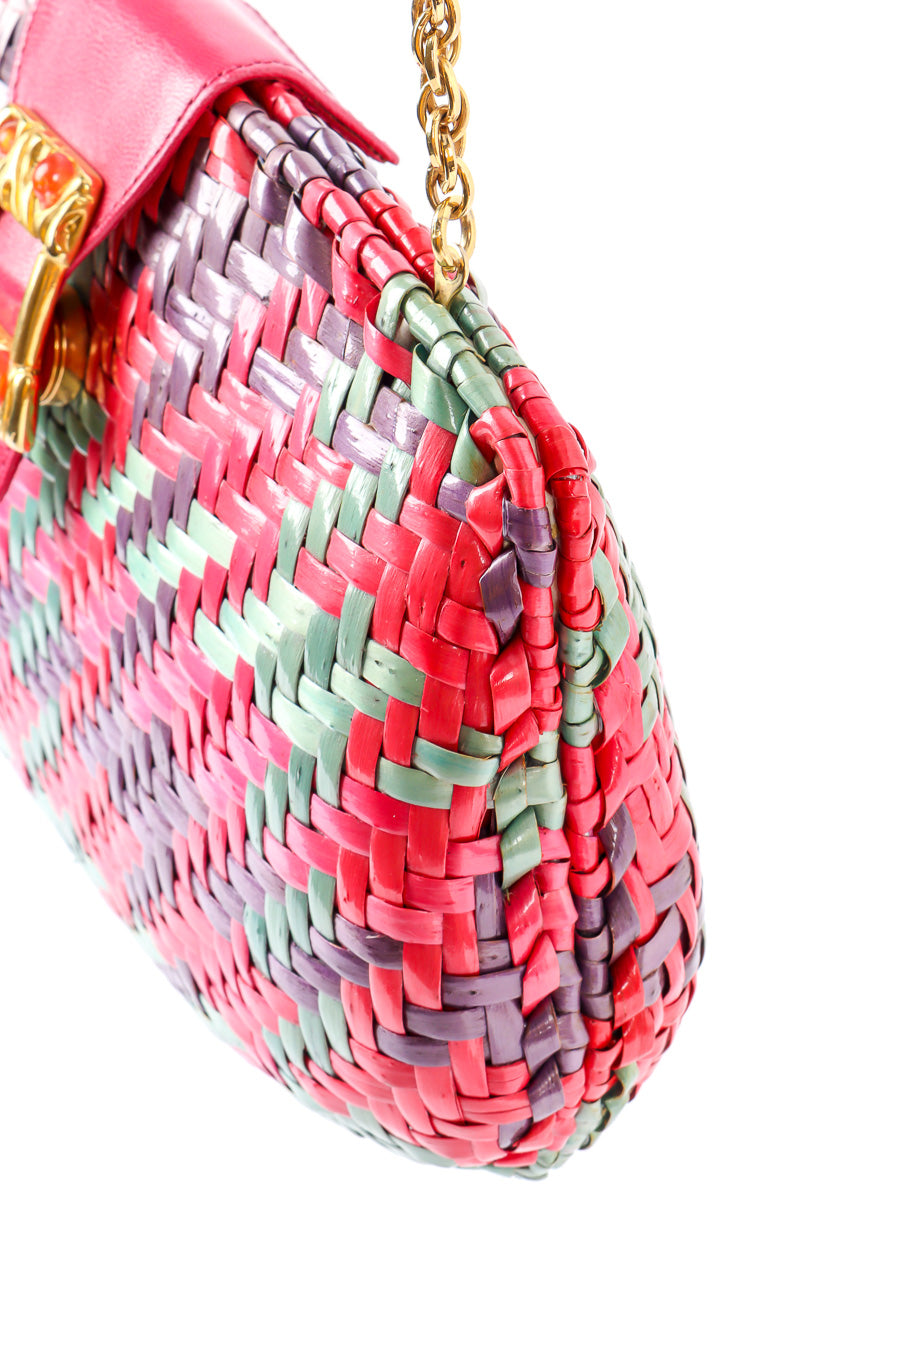 Rodo multicolor woven shoulder clutch product shot of wicker details @recessla